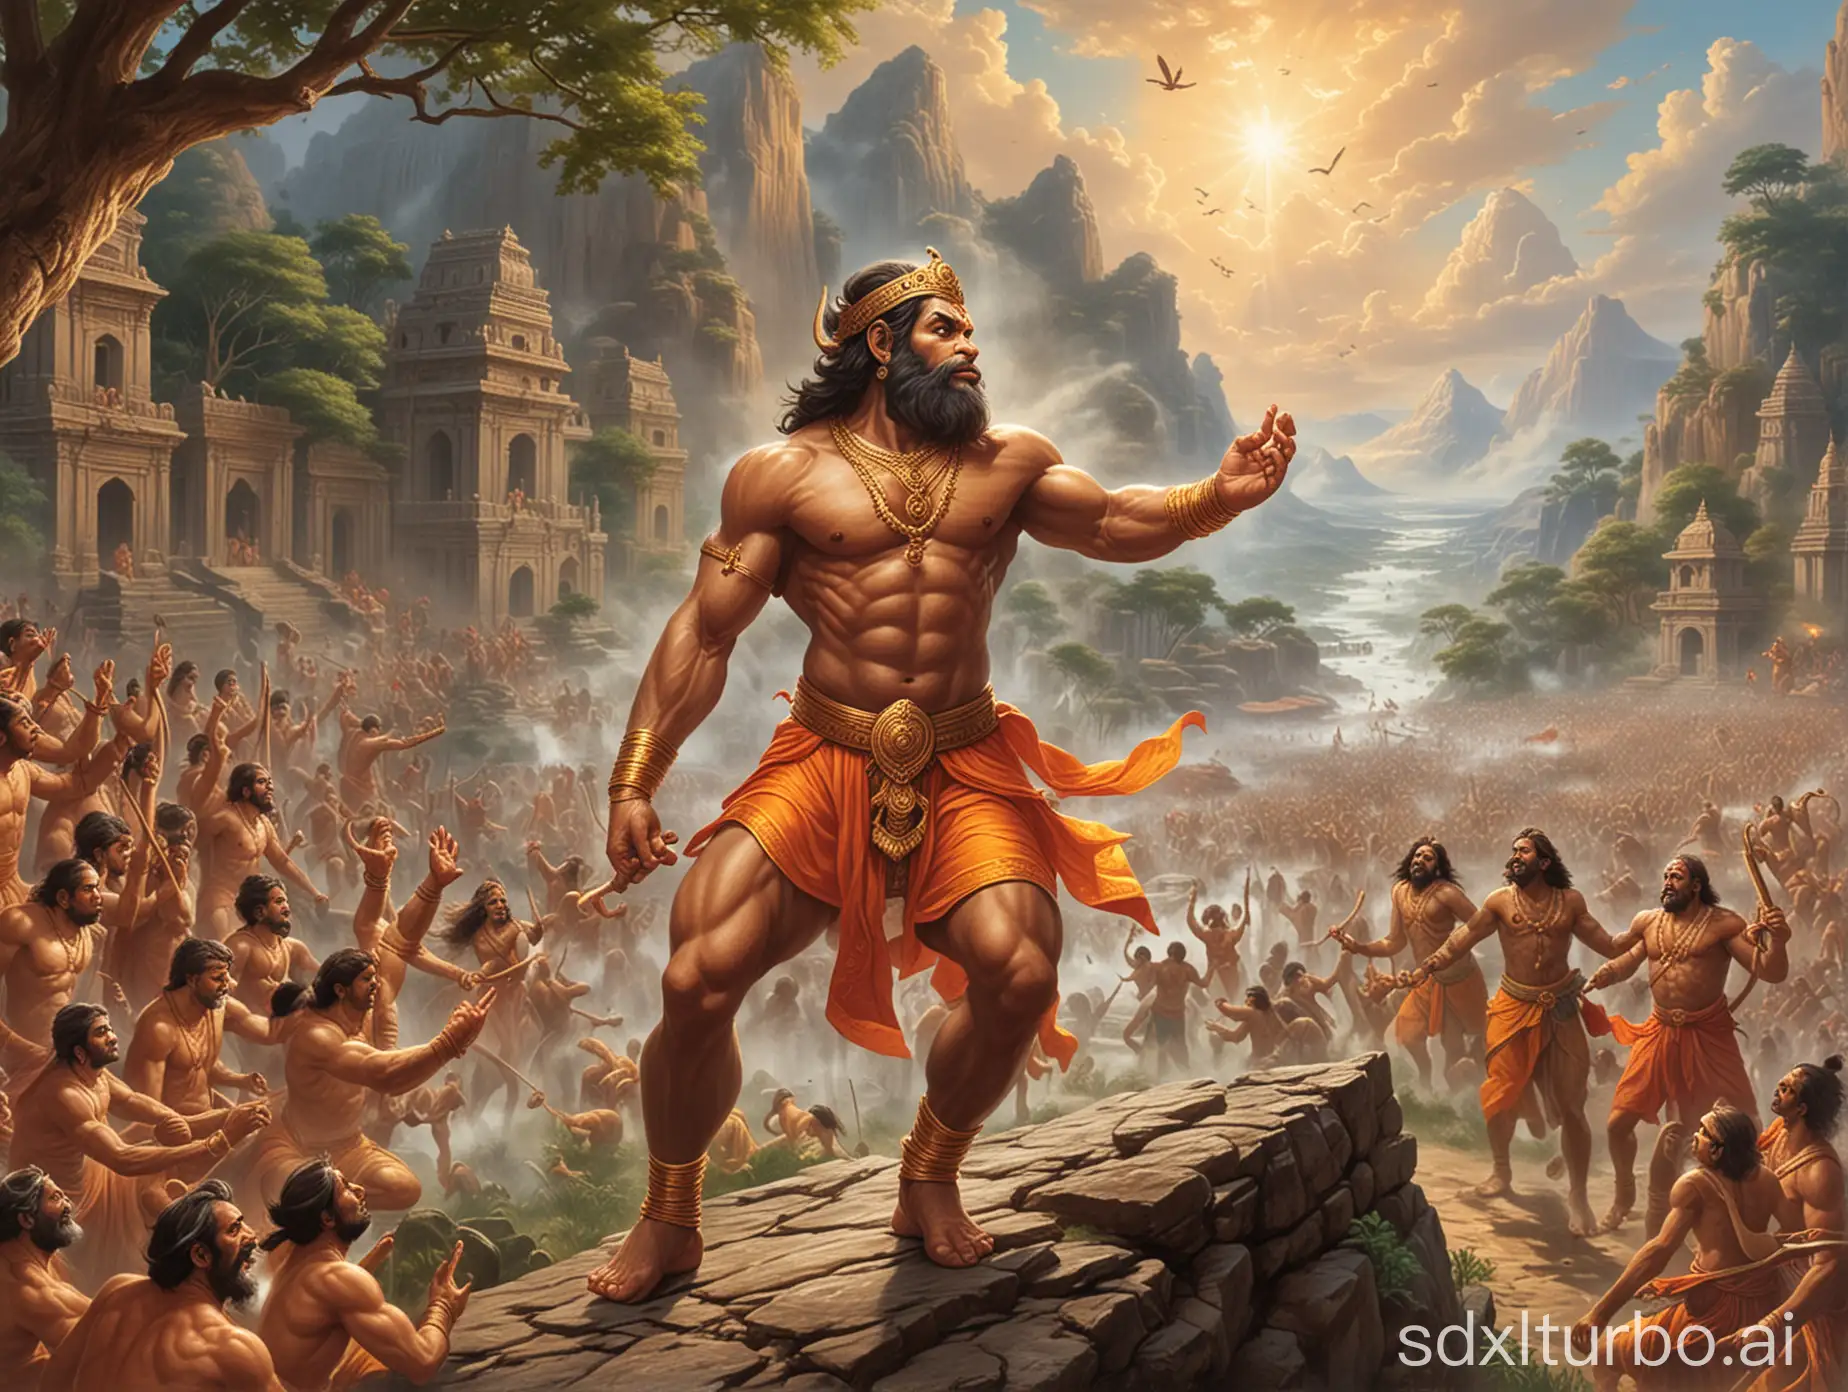 Divine Encounter Hanuman and Sri Ram in the Ancient Kingdom